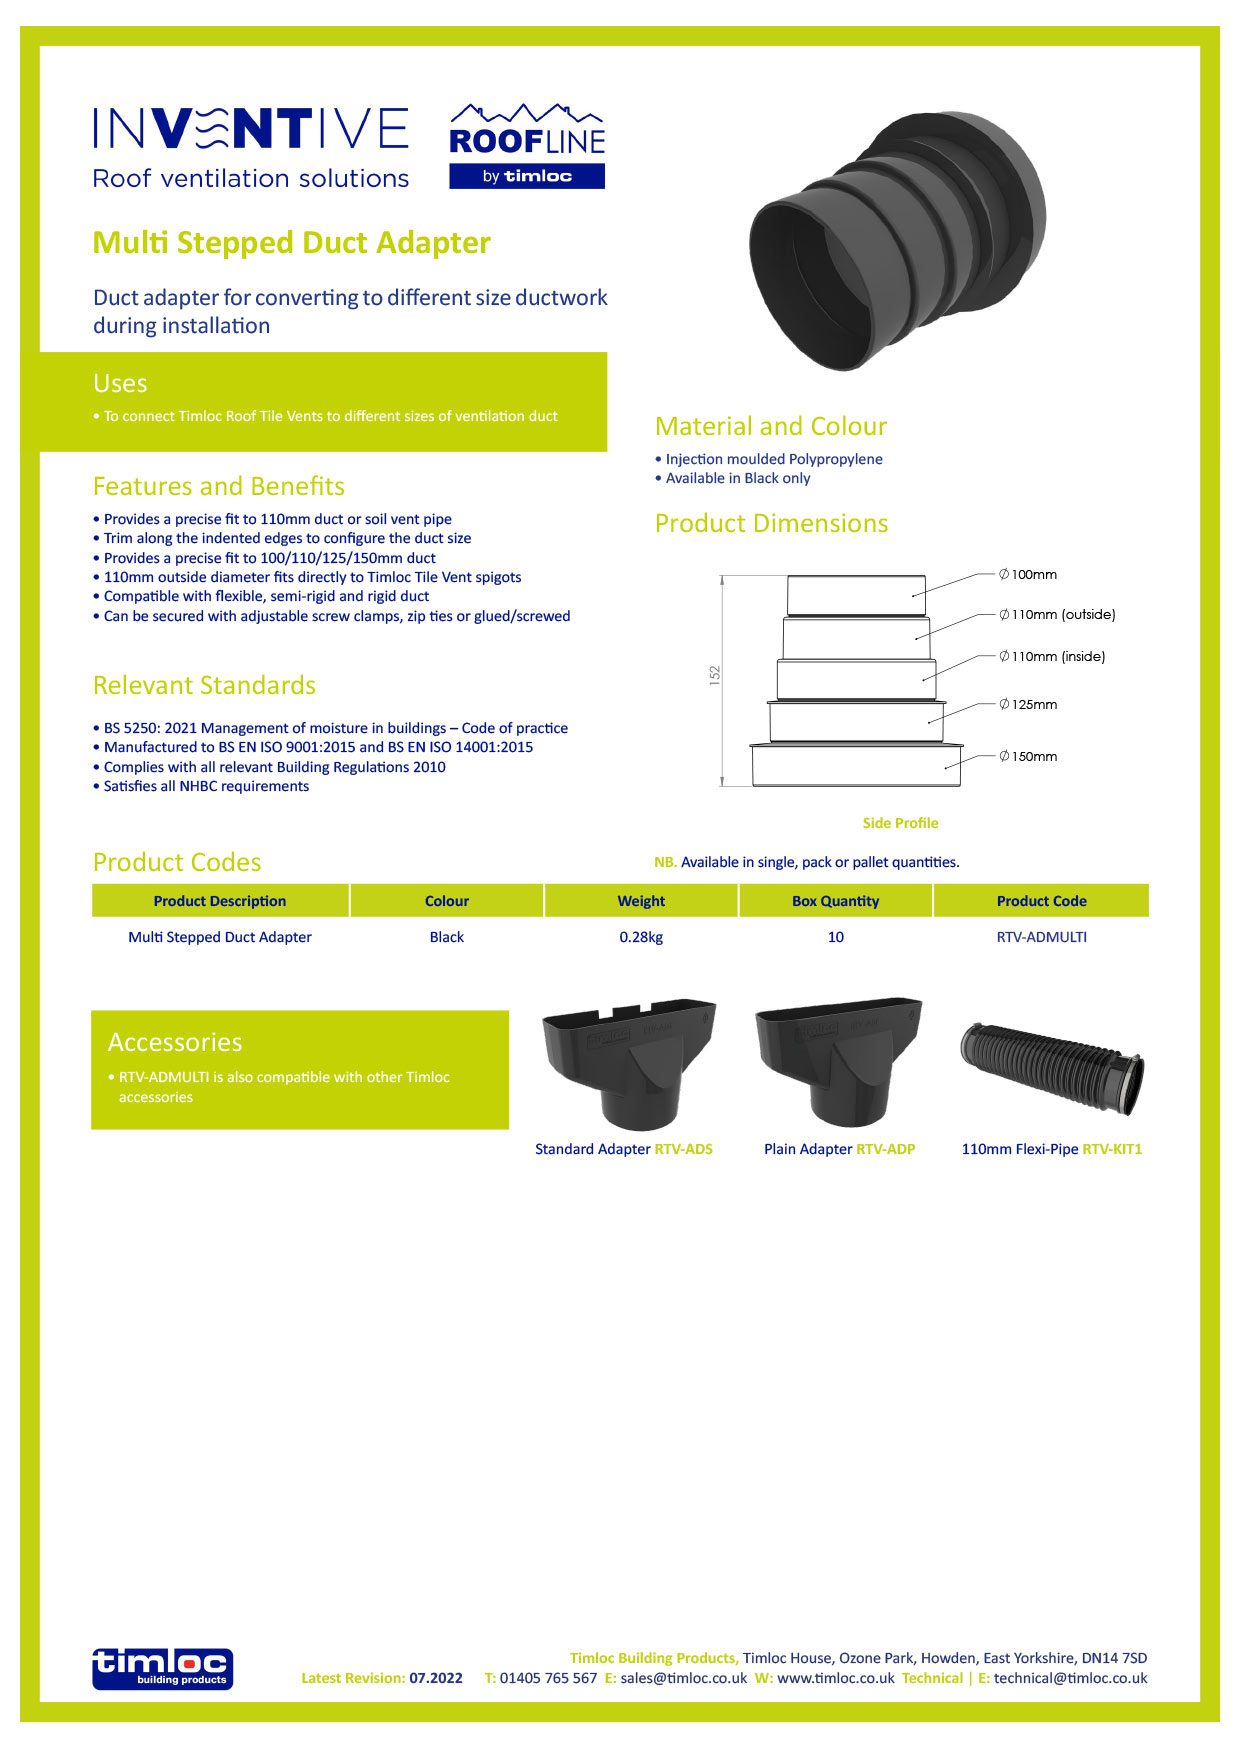 Timloc Building Products Datasheet - Universal Slate Ventilator